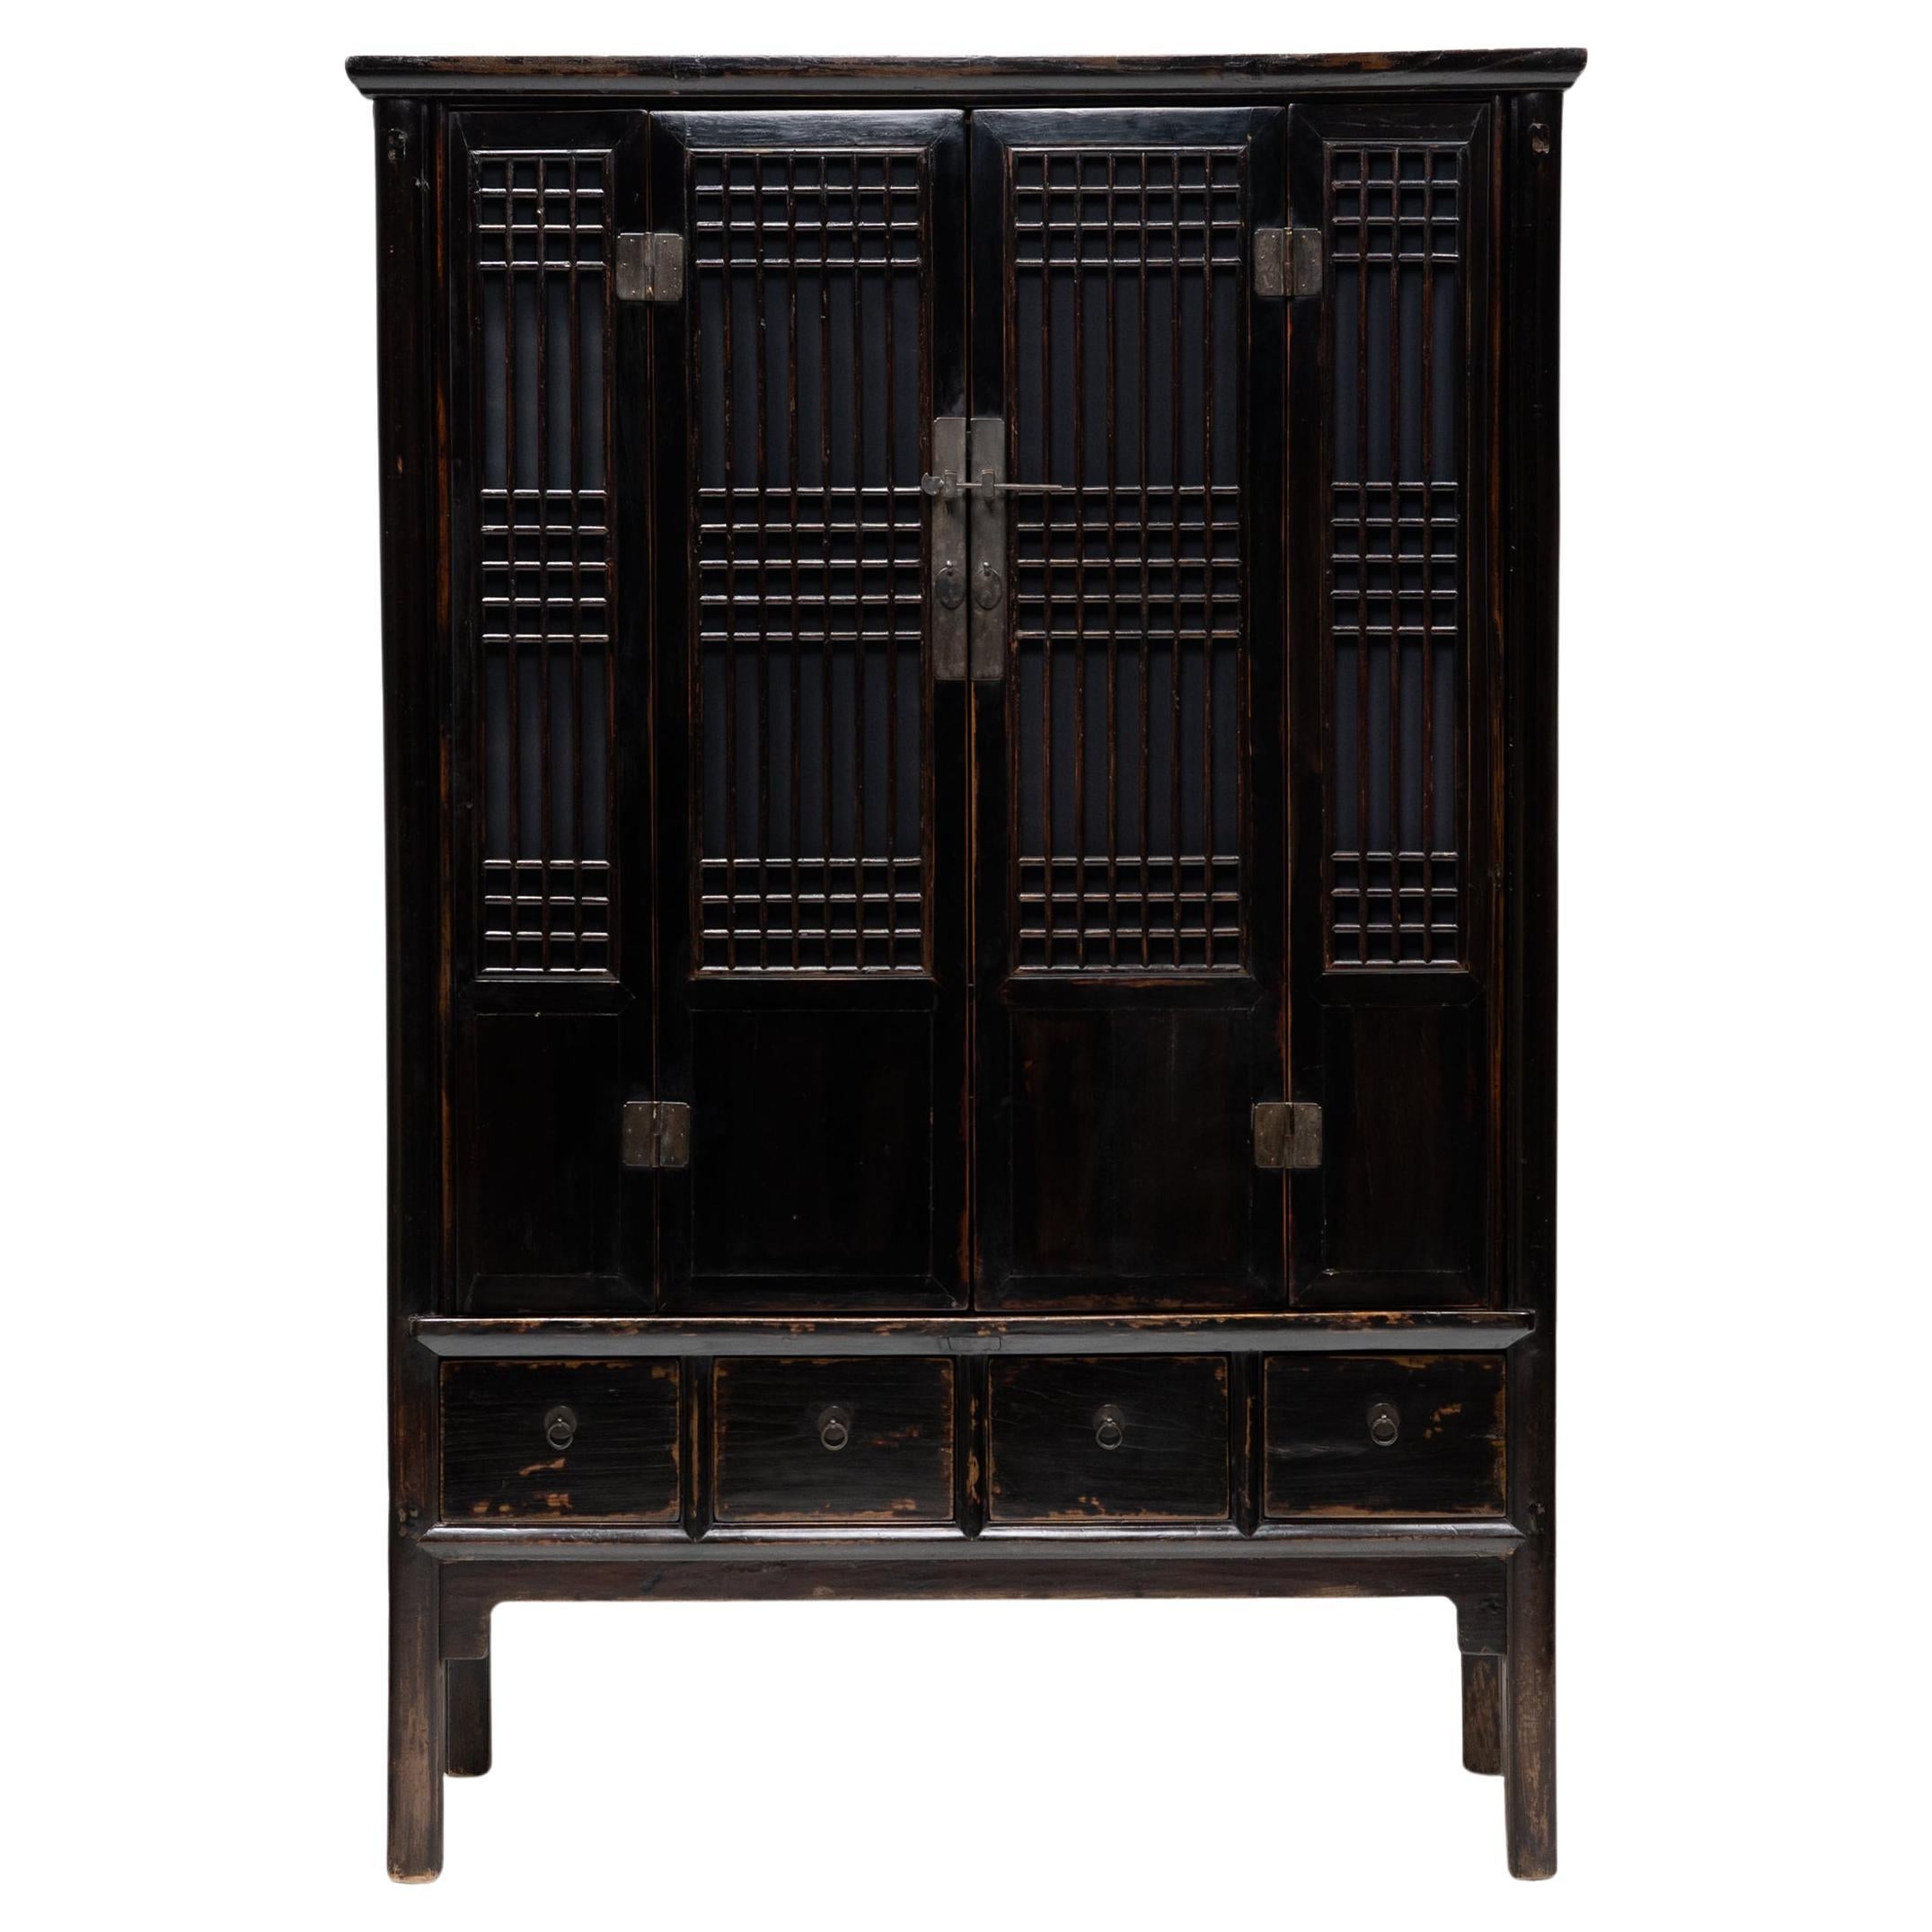 Chinese Black Lacquer Lattice Cabinet, c. 1850 For Sale